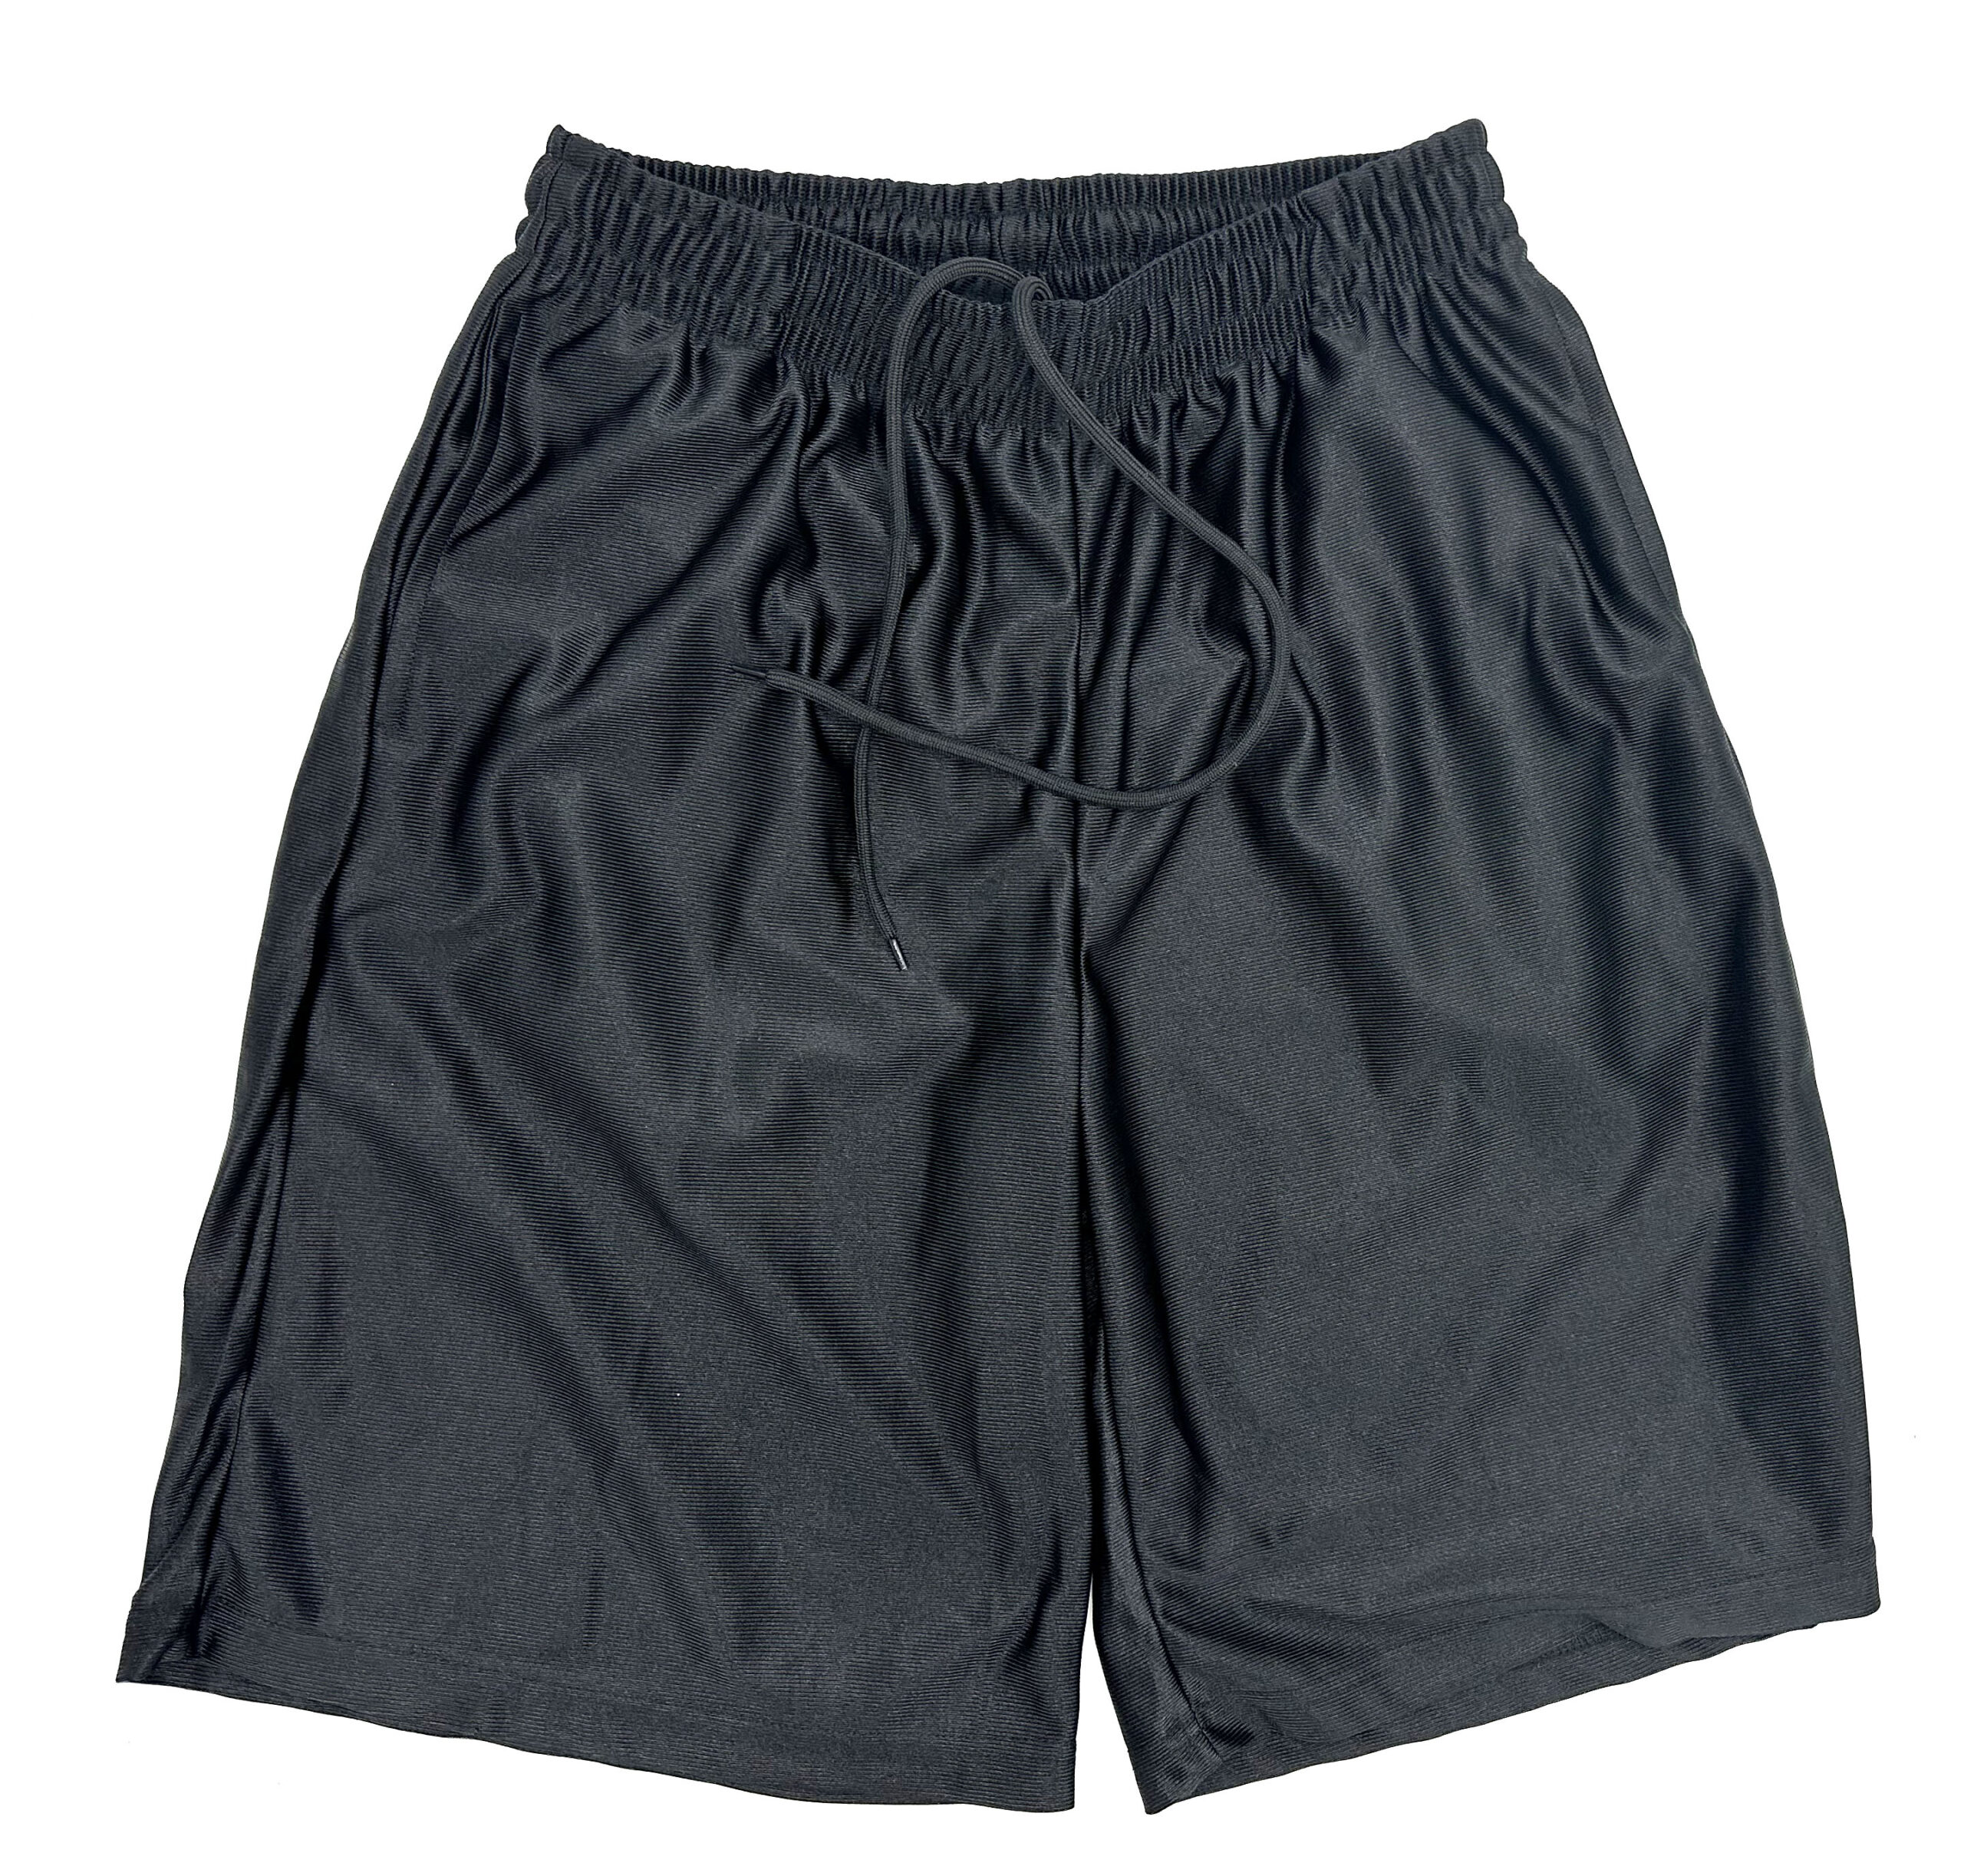 Black dazzle shorts - SBOXERS